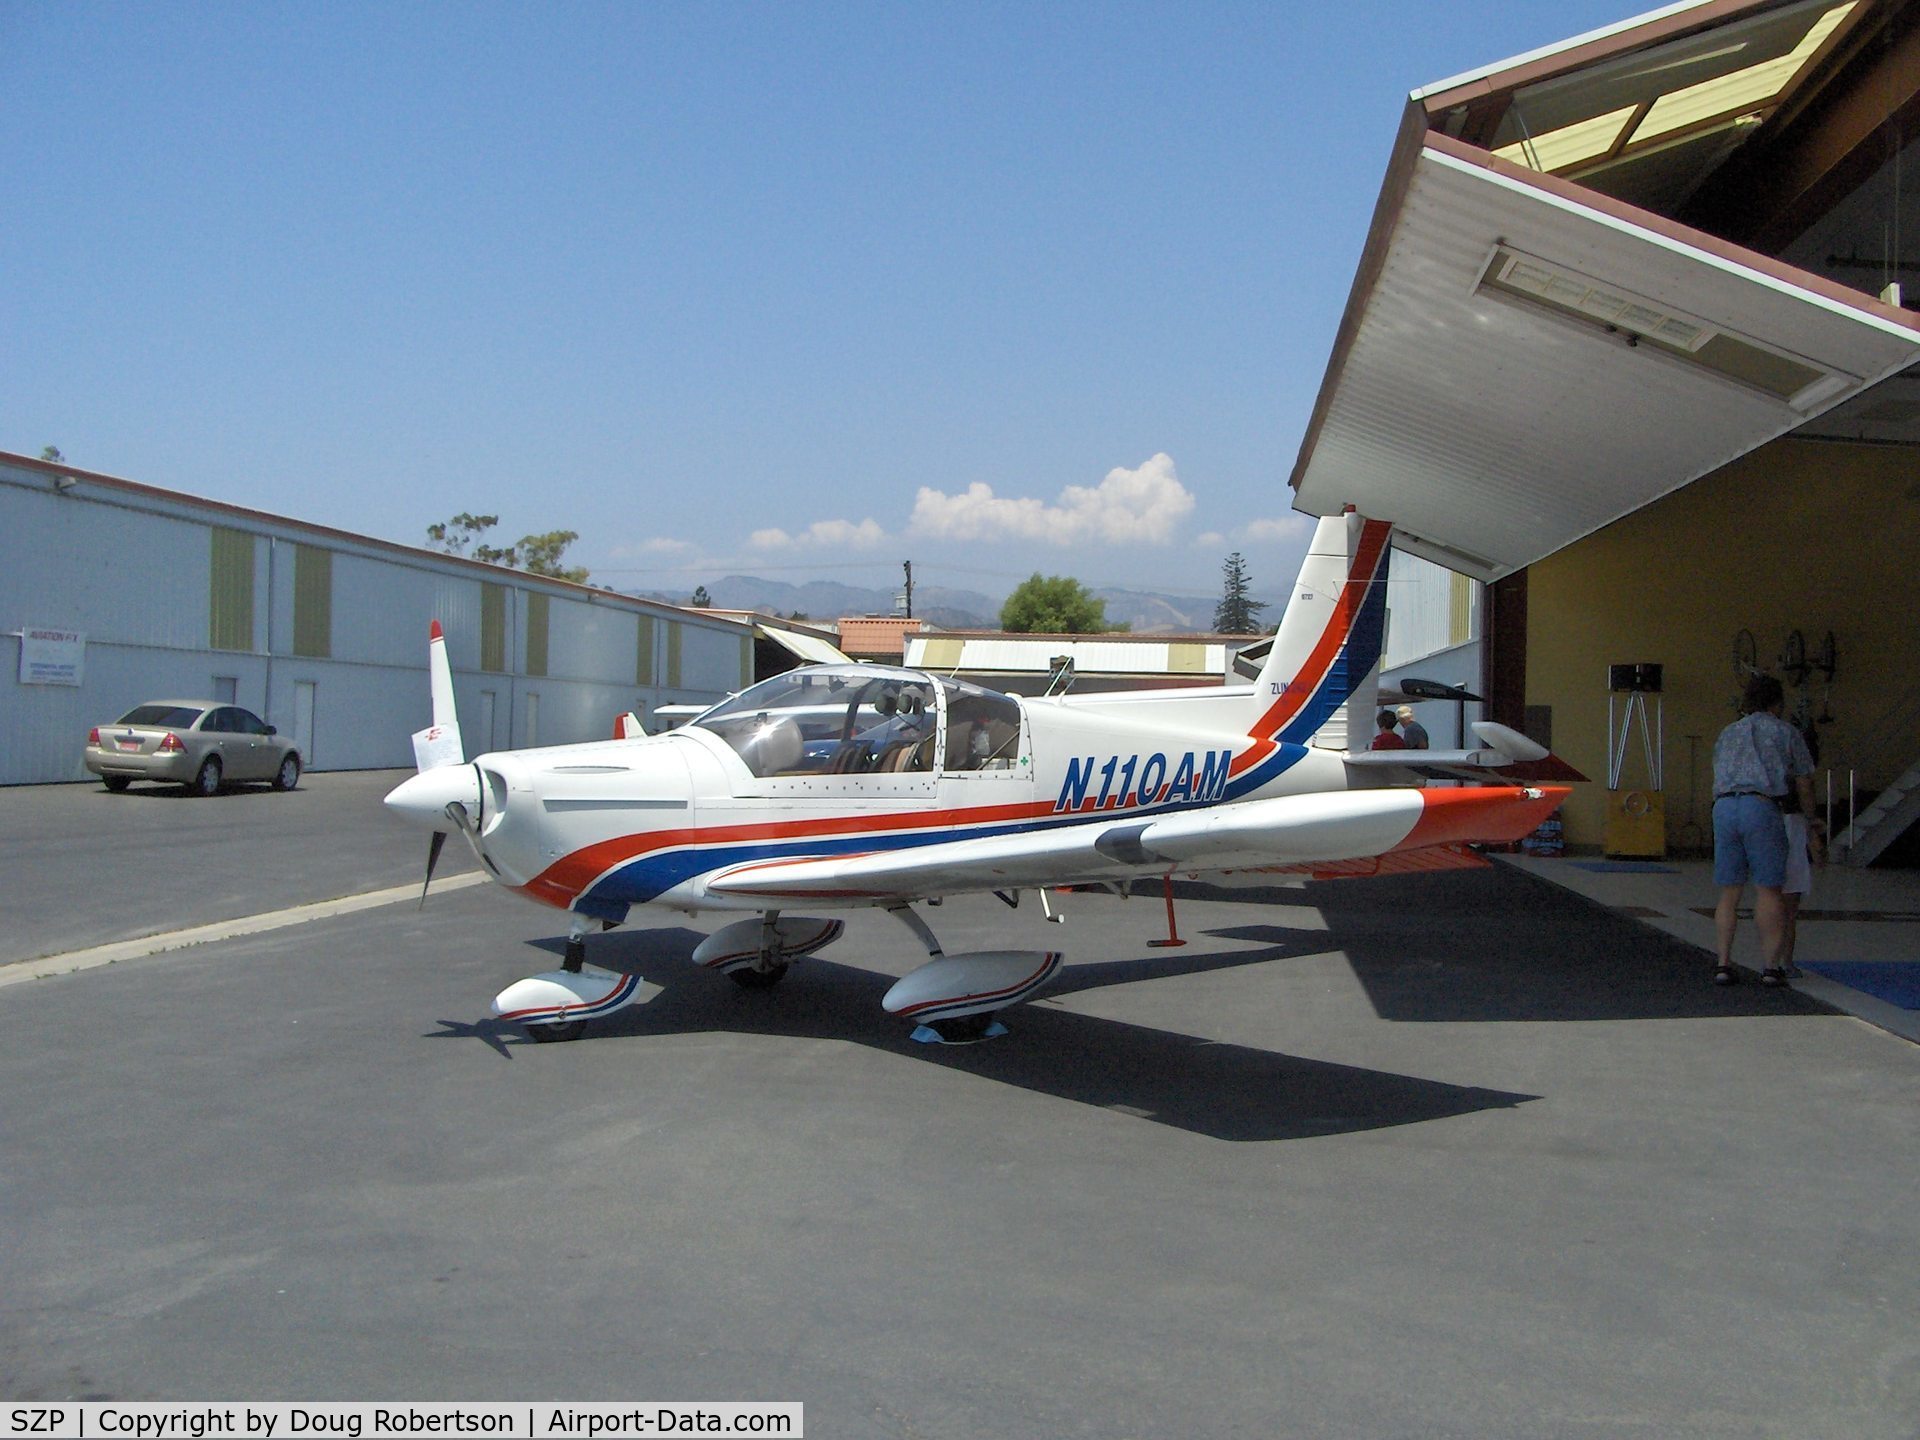 Santa Paula Airport (SZP) - Aviation Museum of Santa Paula, Hangar 6, The McWilliams hangar, Moravan Zlin Z242L fully aerobatic, N110AM